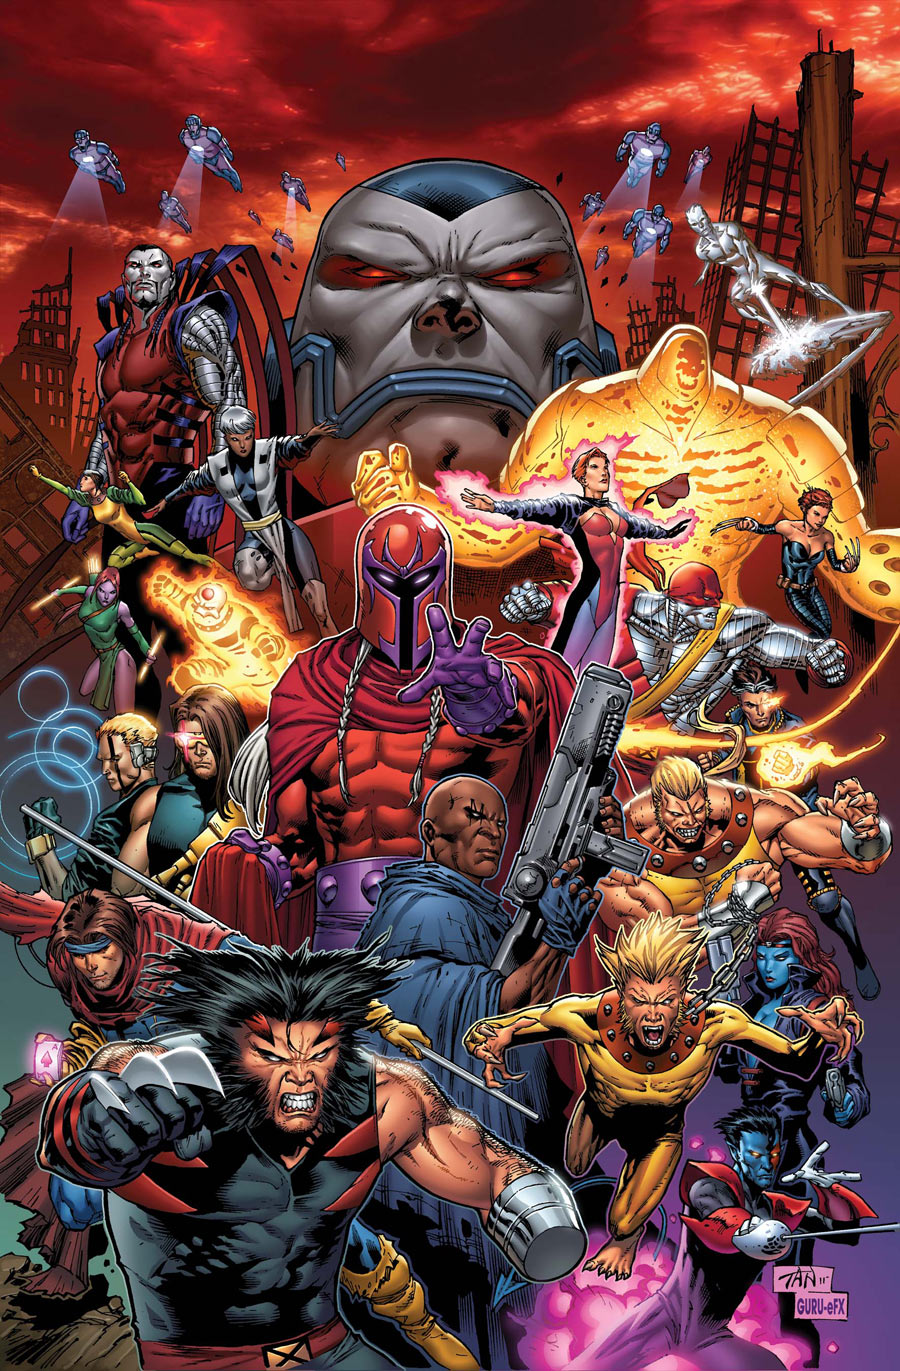 Lima Kisah Terbaik Komik X-Men